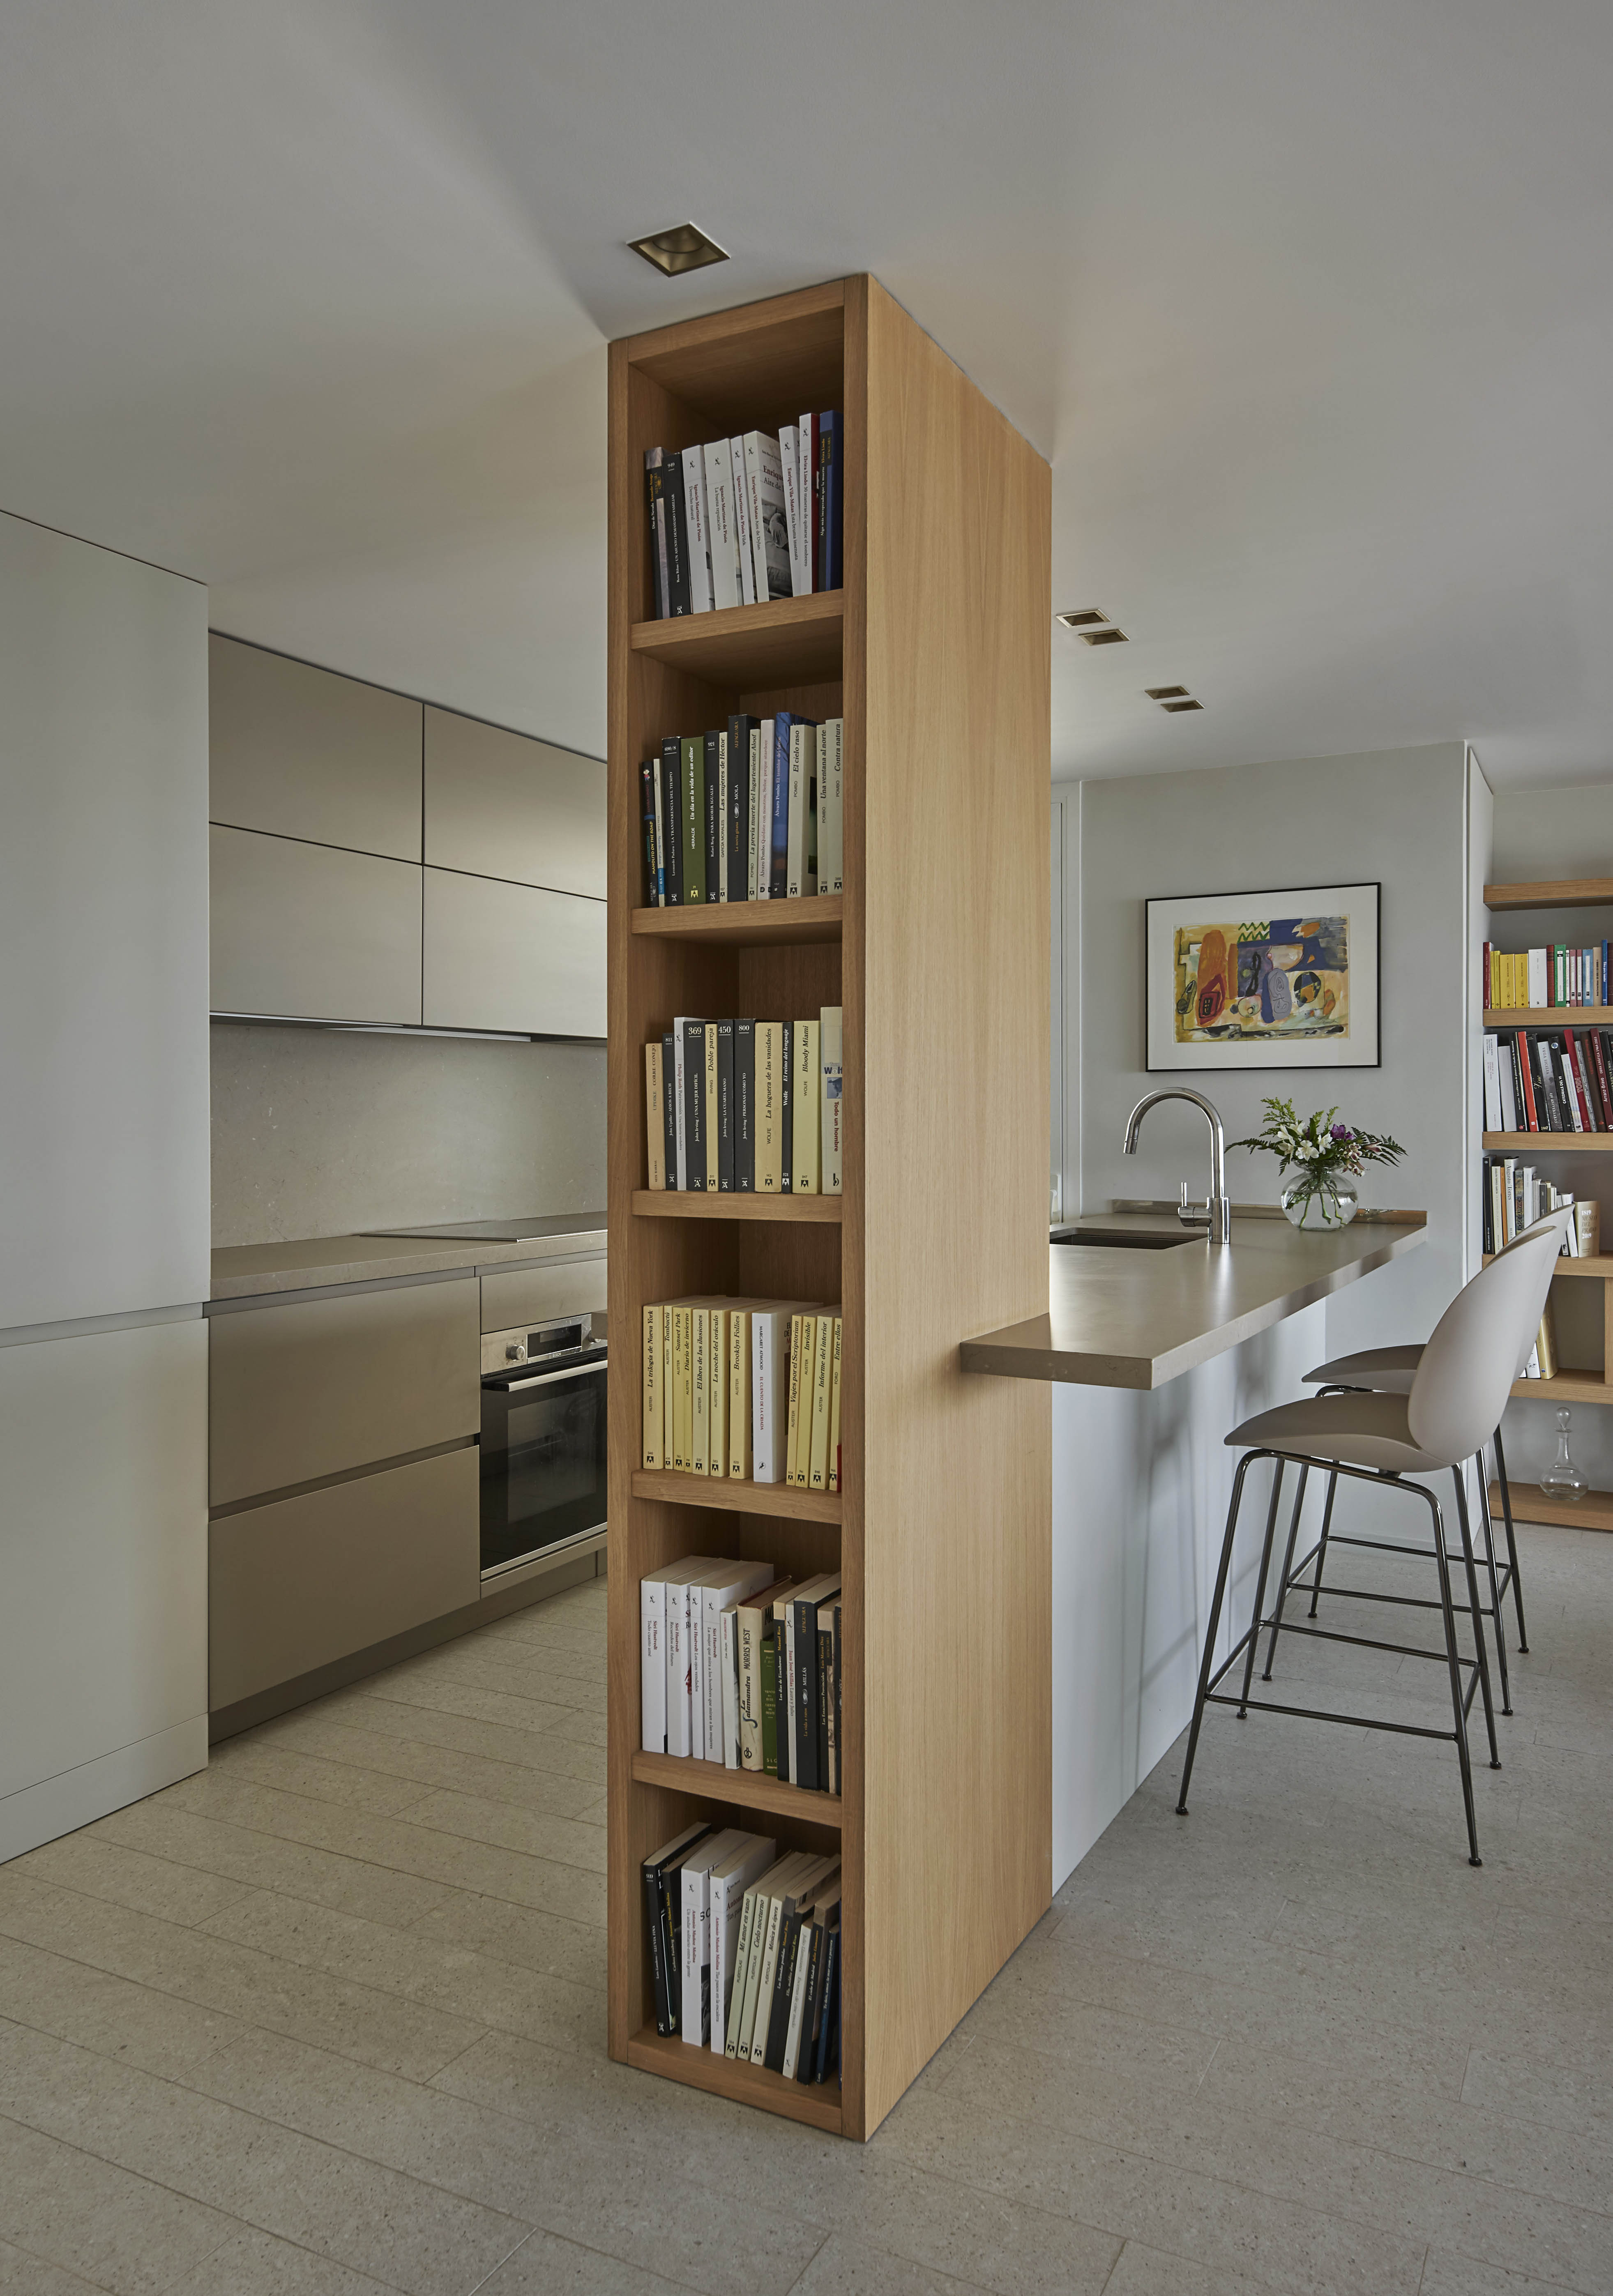 modernkitchen design with bookshelf column